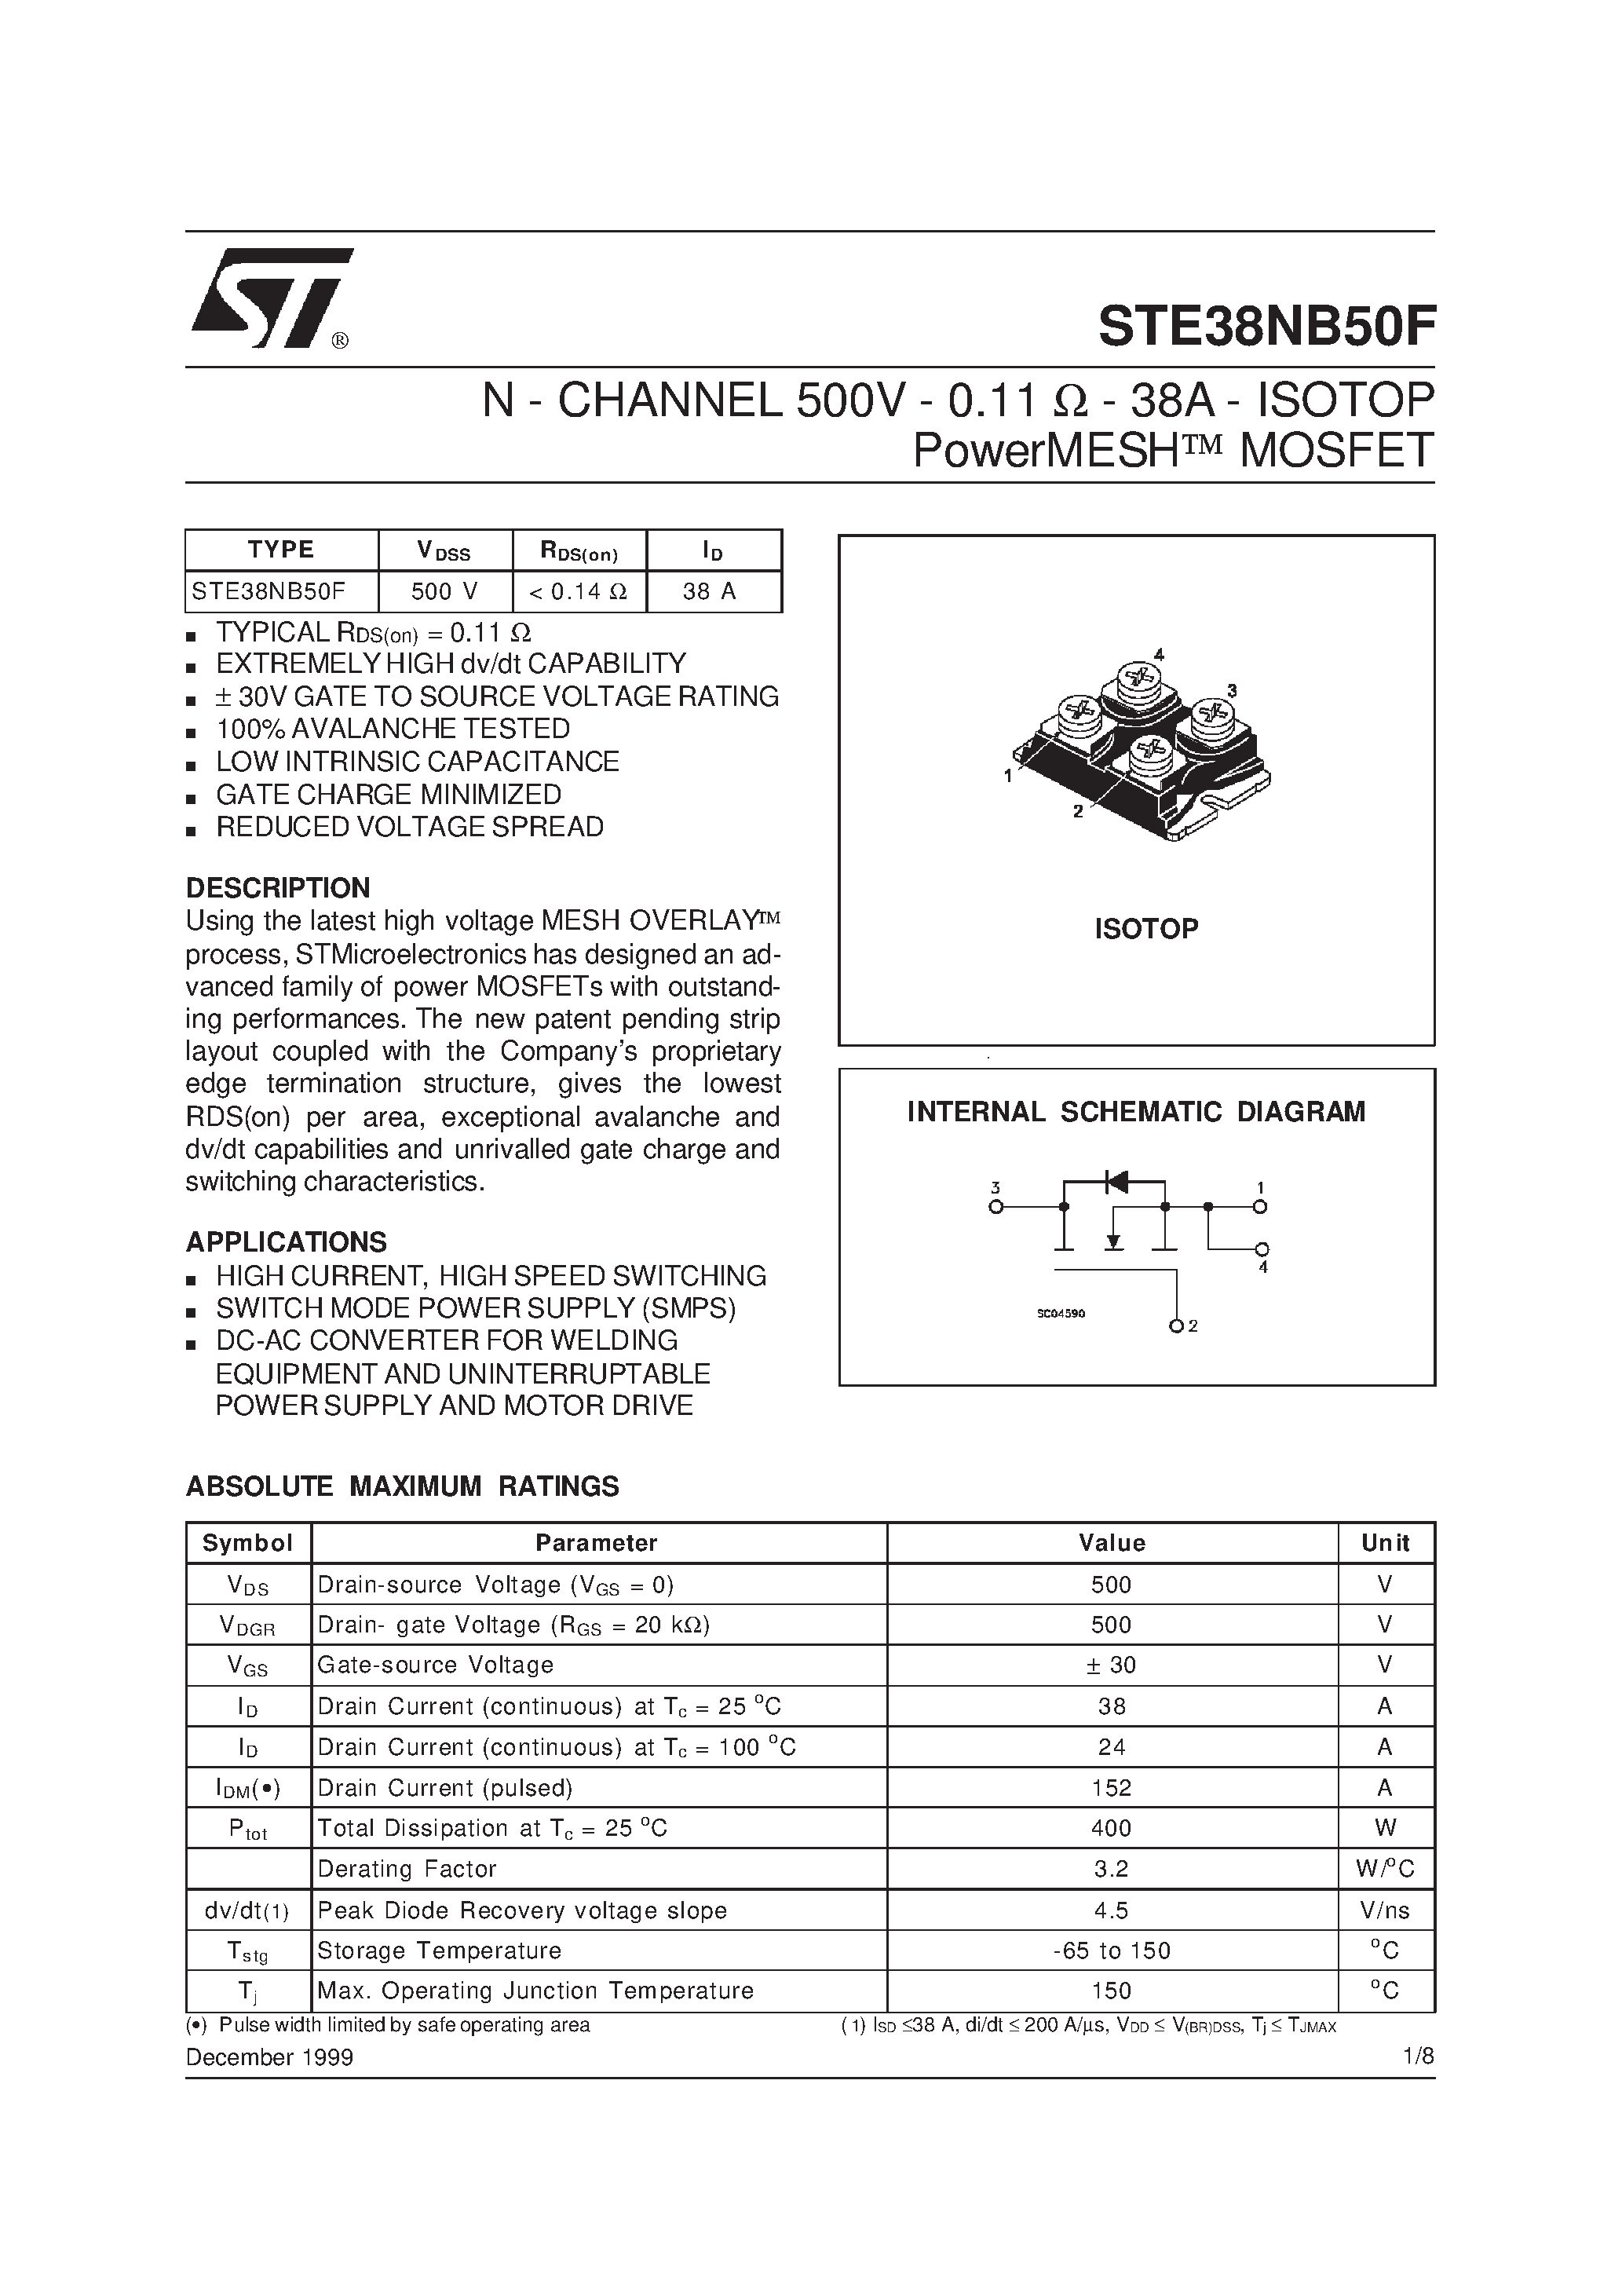 Datasheet STE38NB50F - N - CHANNEL PowerMESH MOSFET page 1